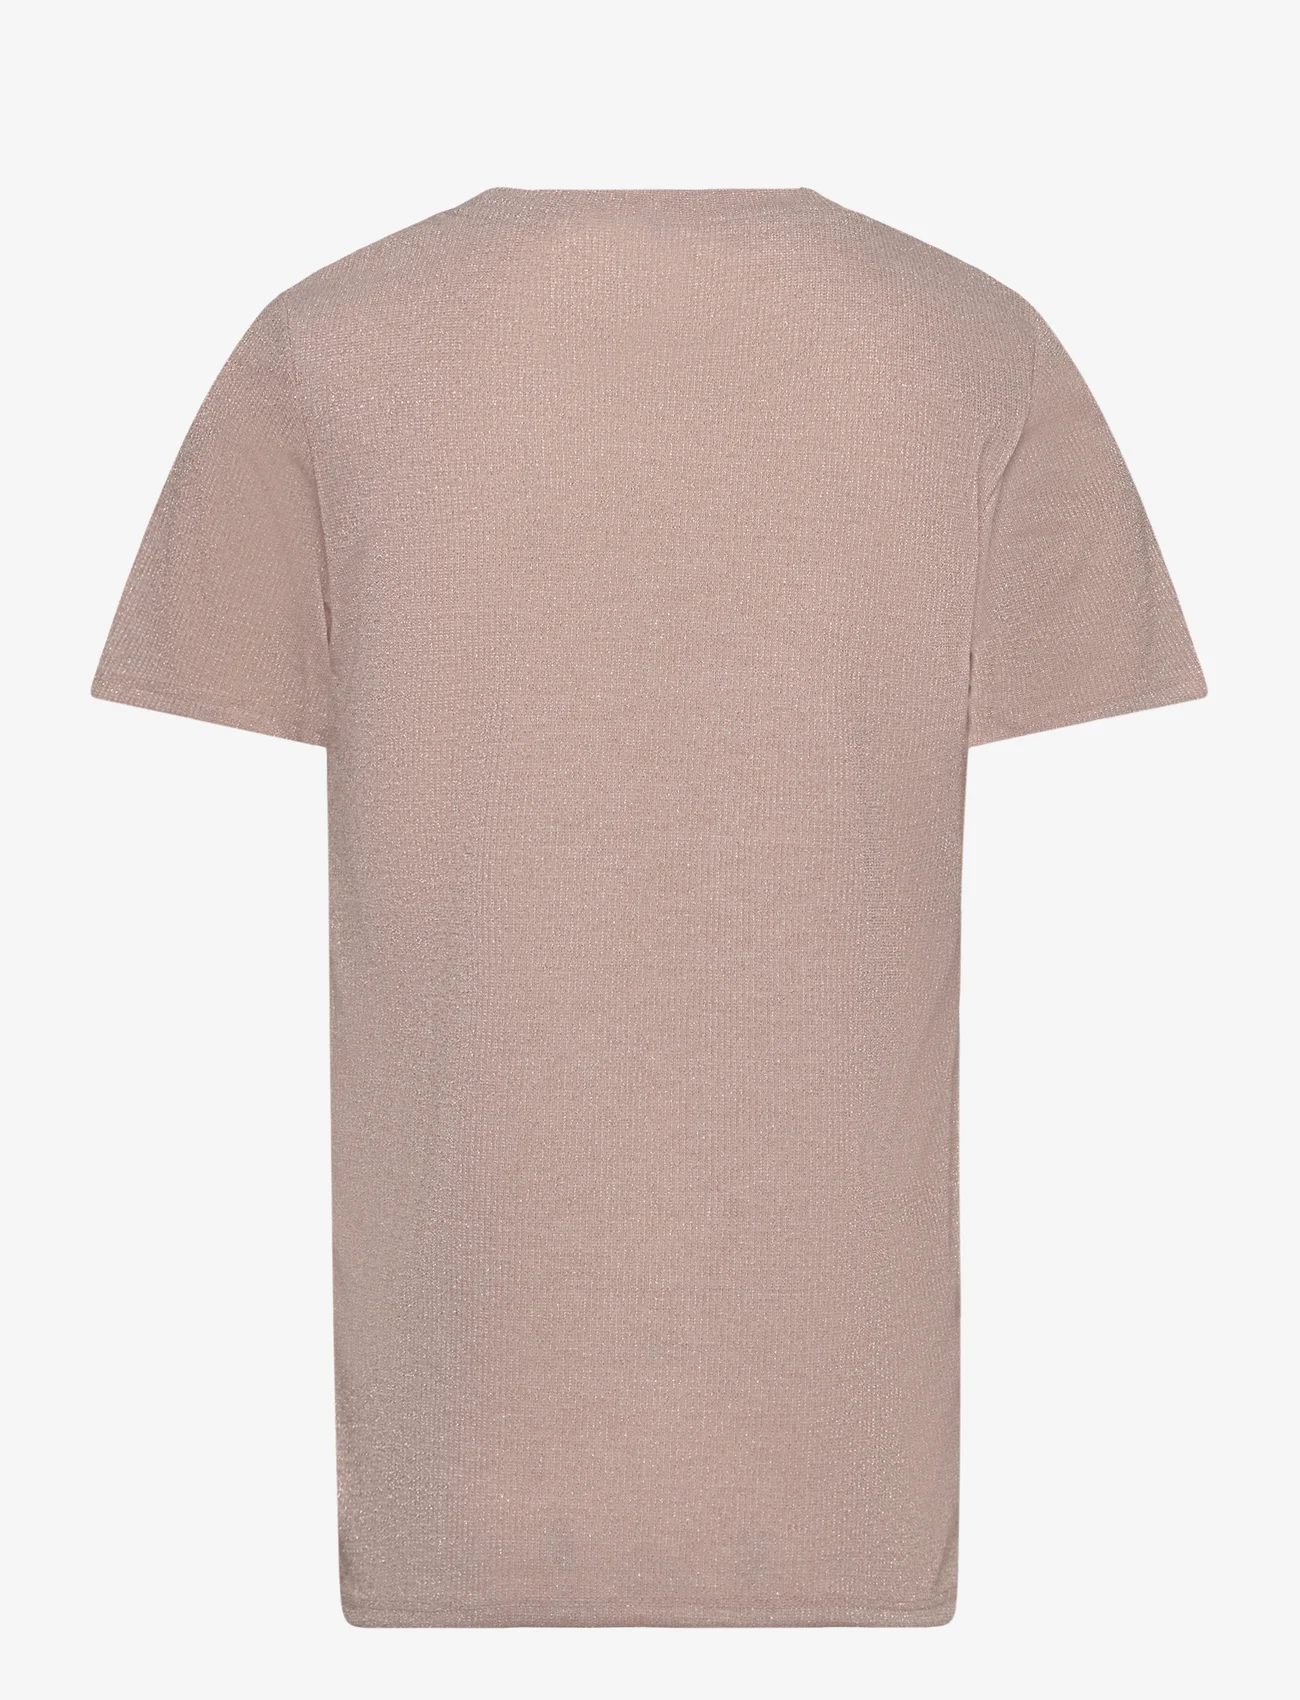 Sofie Schnoor Baby and Kids - T-shirt short-sleeve - lühikeste varrukatega t-särgid - light rose - 1